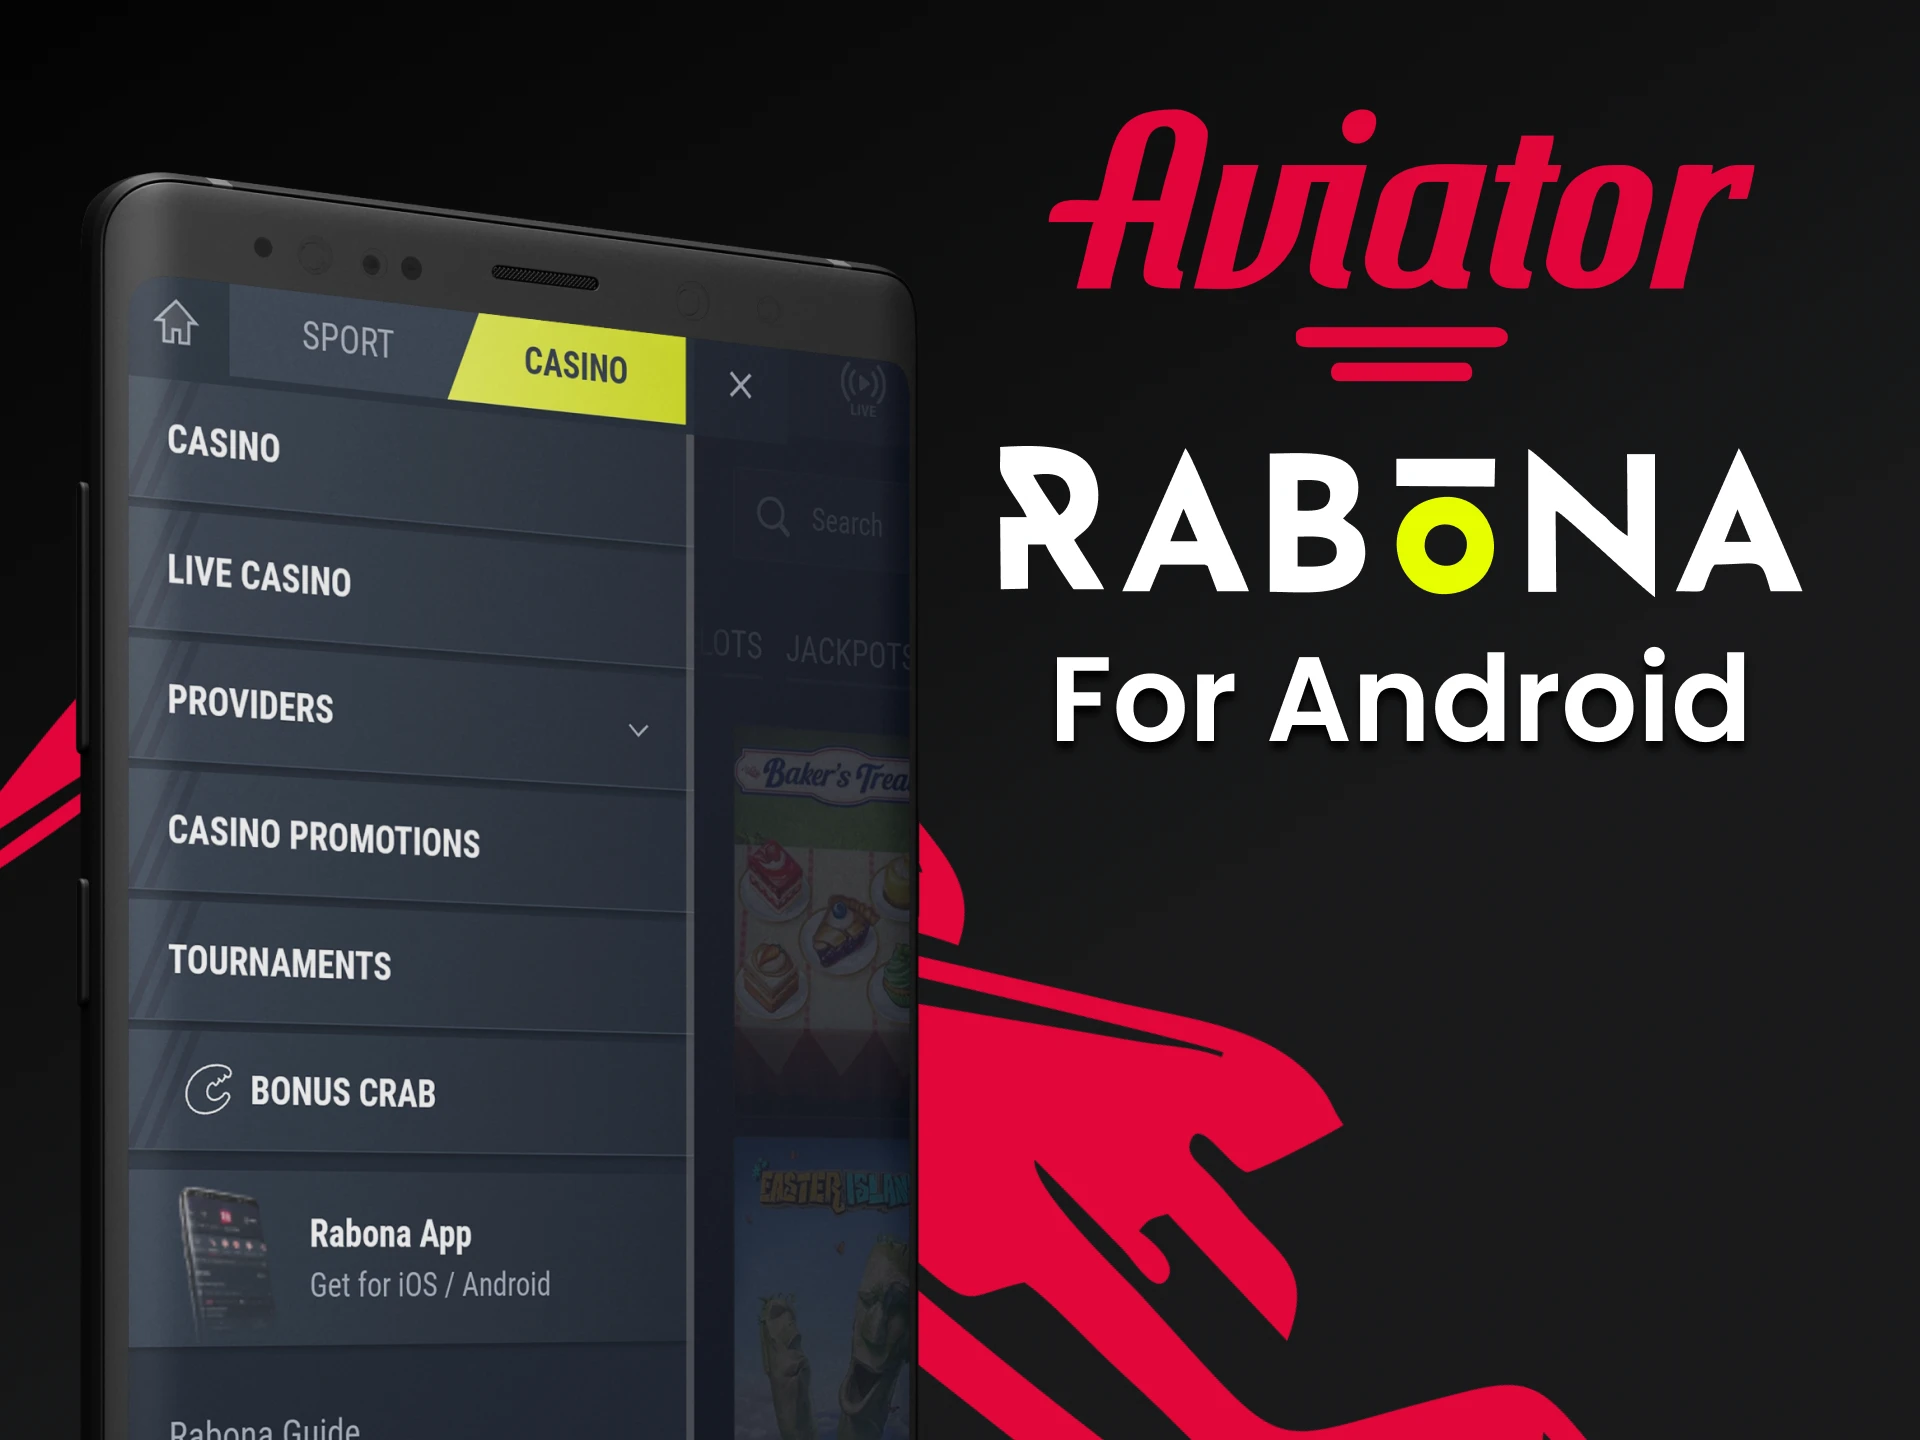 Baixe o aplicativo Rabona Android para Aviator.